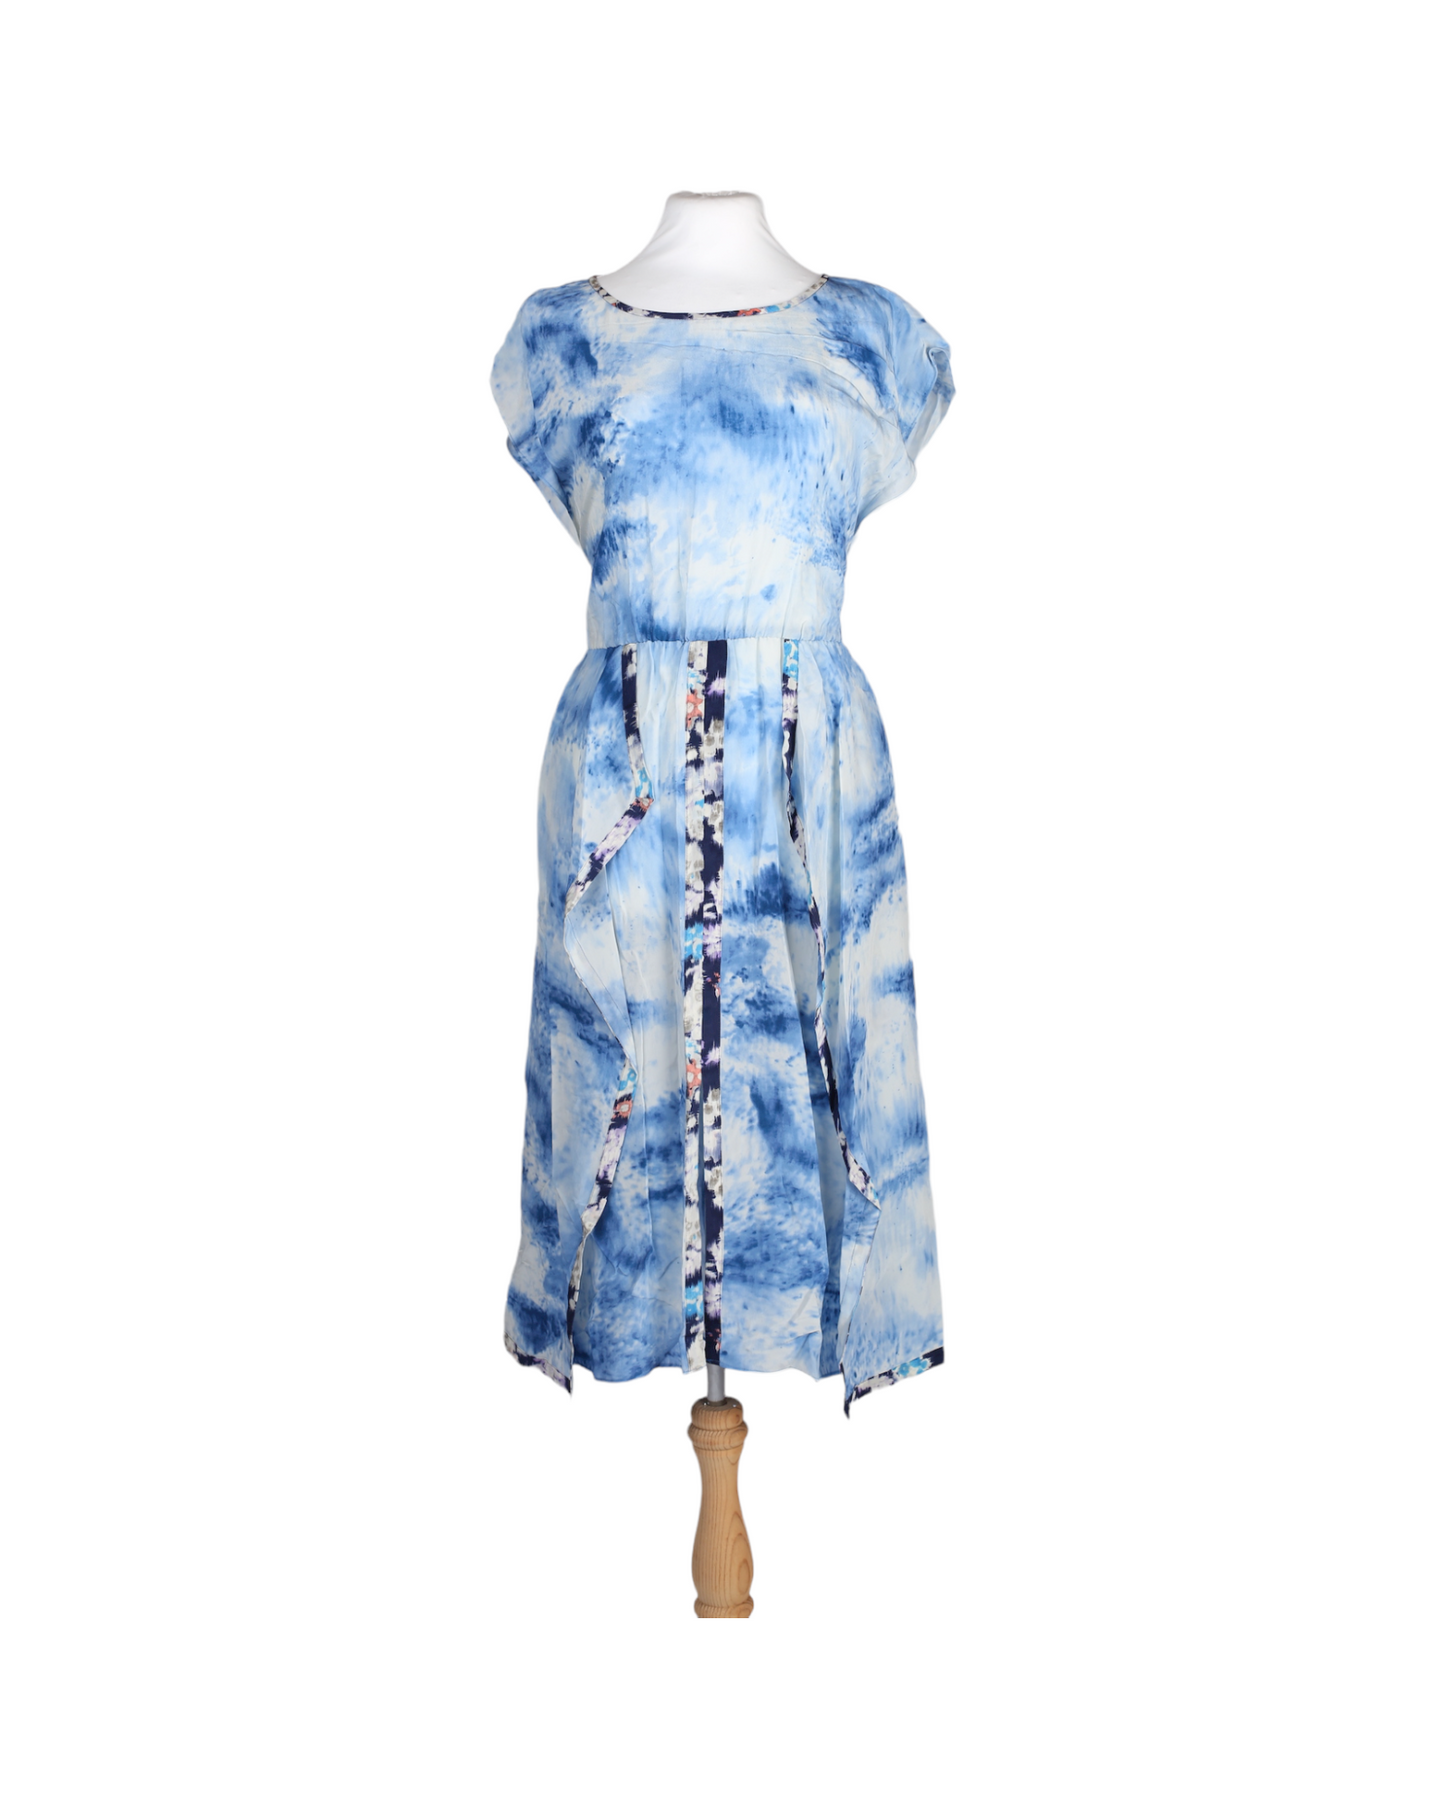 Rebecca Taylor Shibori Blue Cloud Watercolor Dress